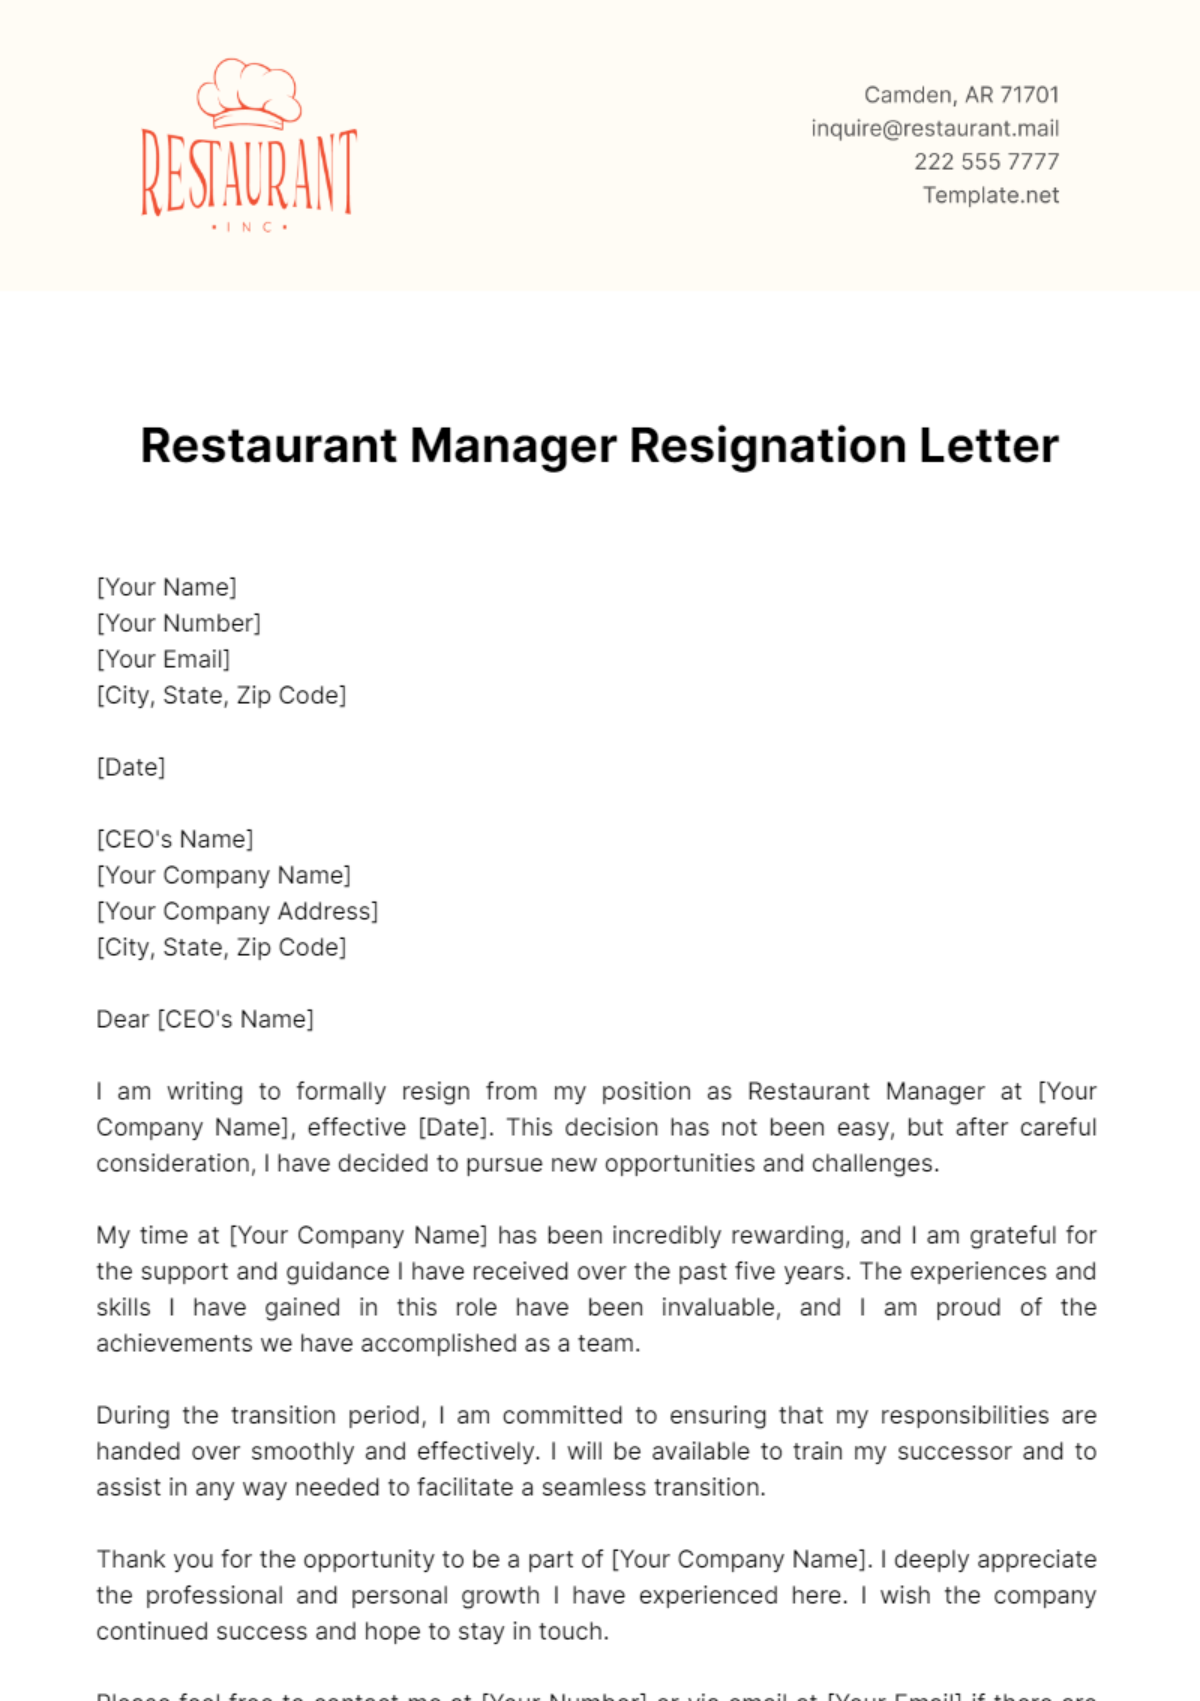 Free Restaurant Manager Resignation Letter Template